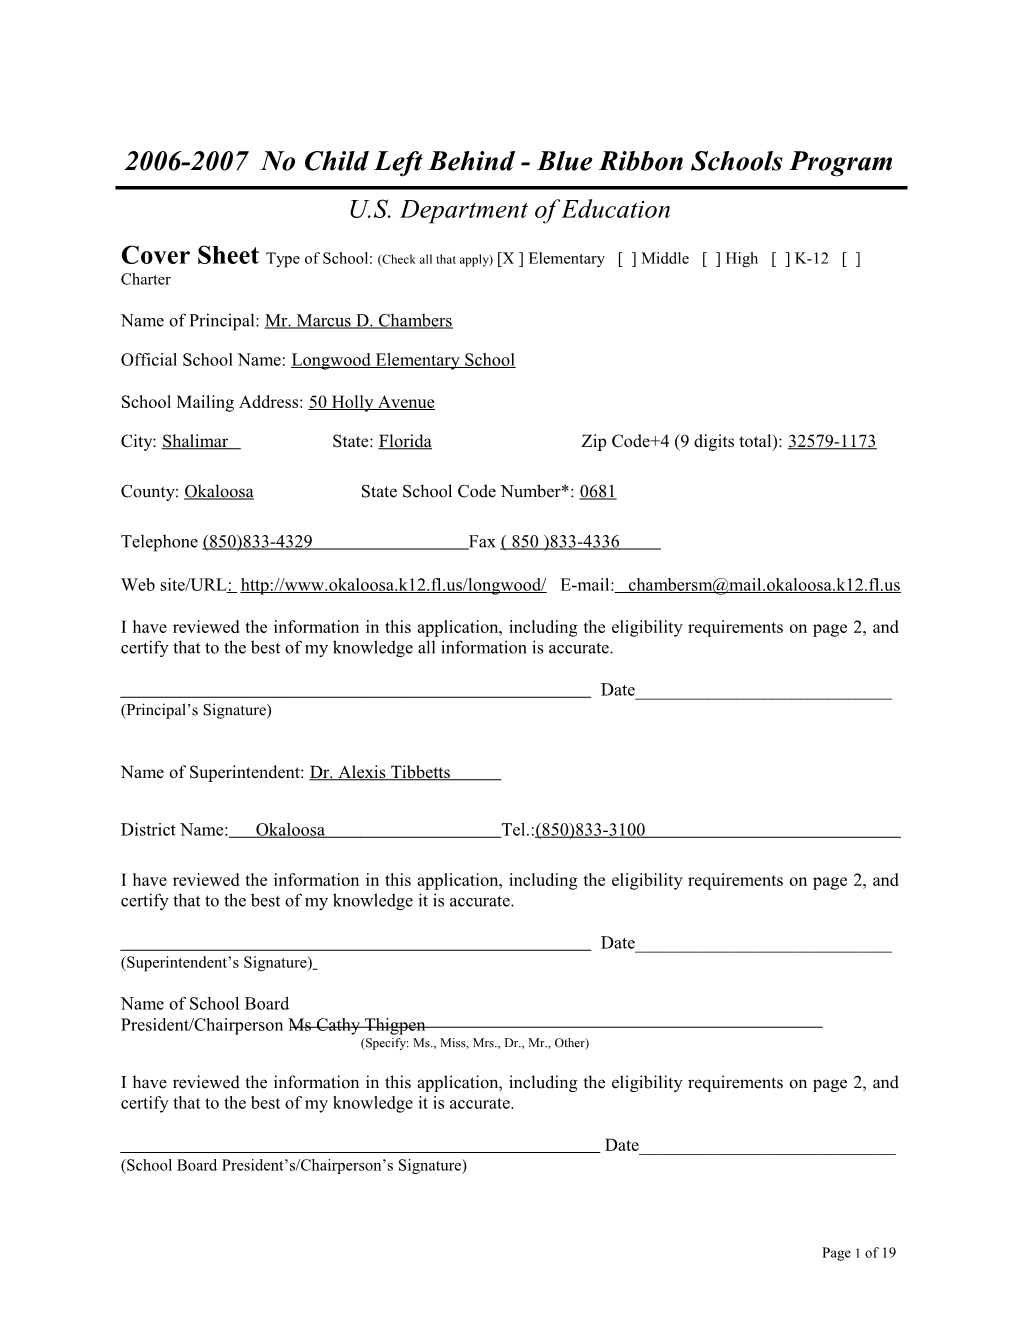 Application: 2006-2007, No Child Left Behind - Blue Ribbon Schools Program (MS Word) s6